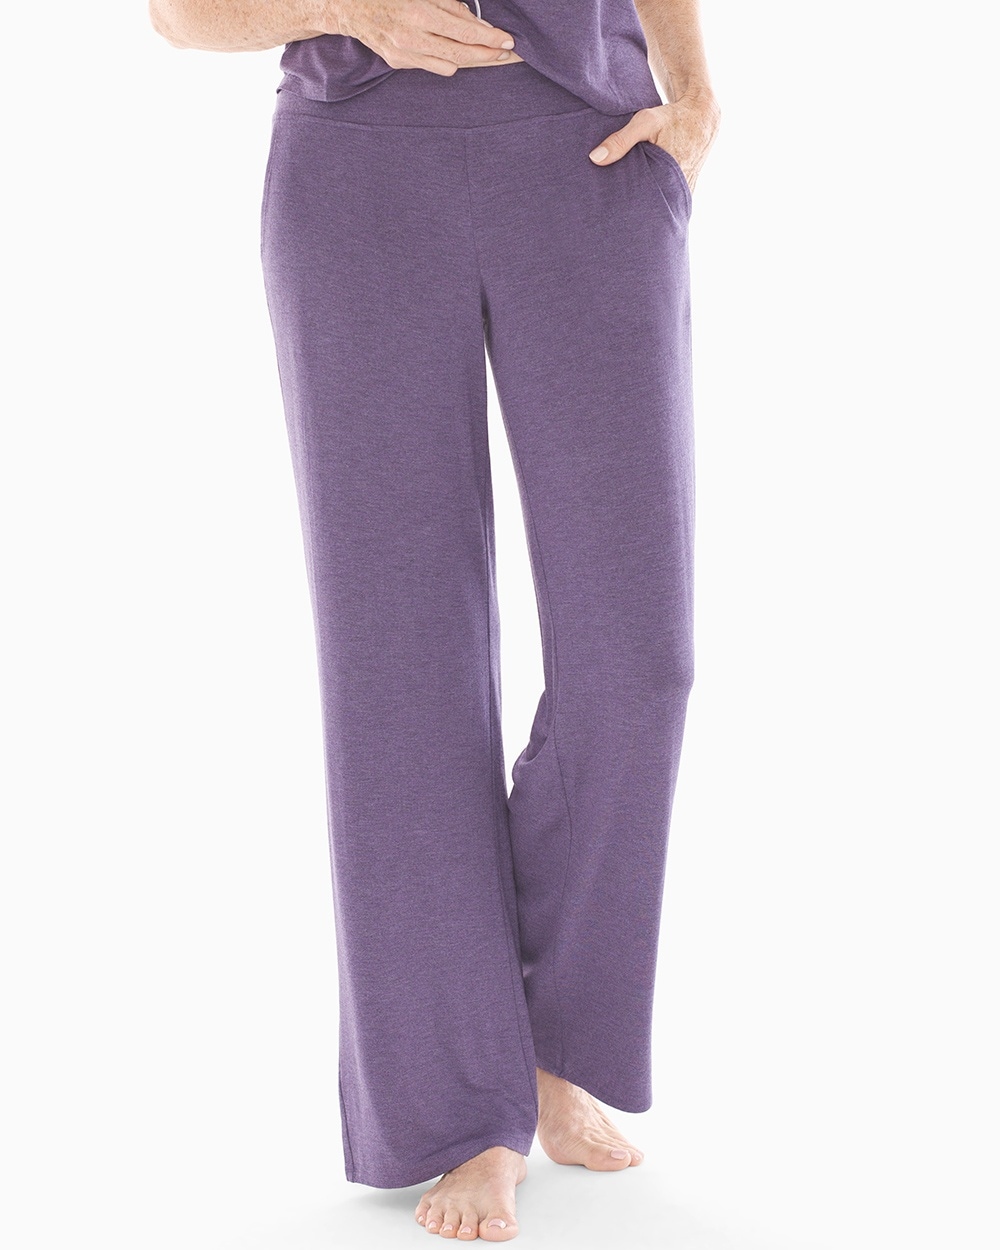 Cool Nights Pajama Pants Heather Black Violet